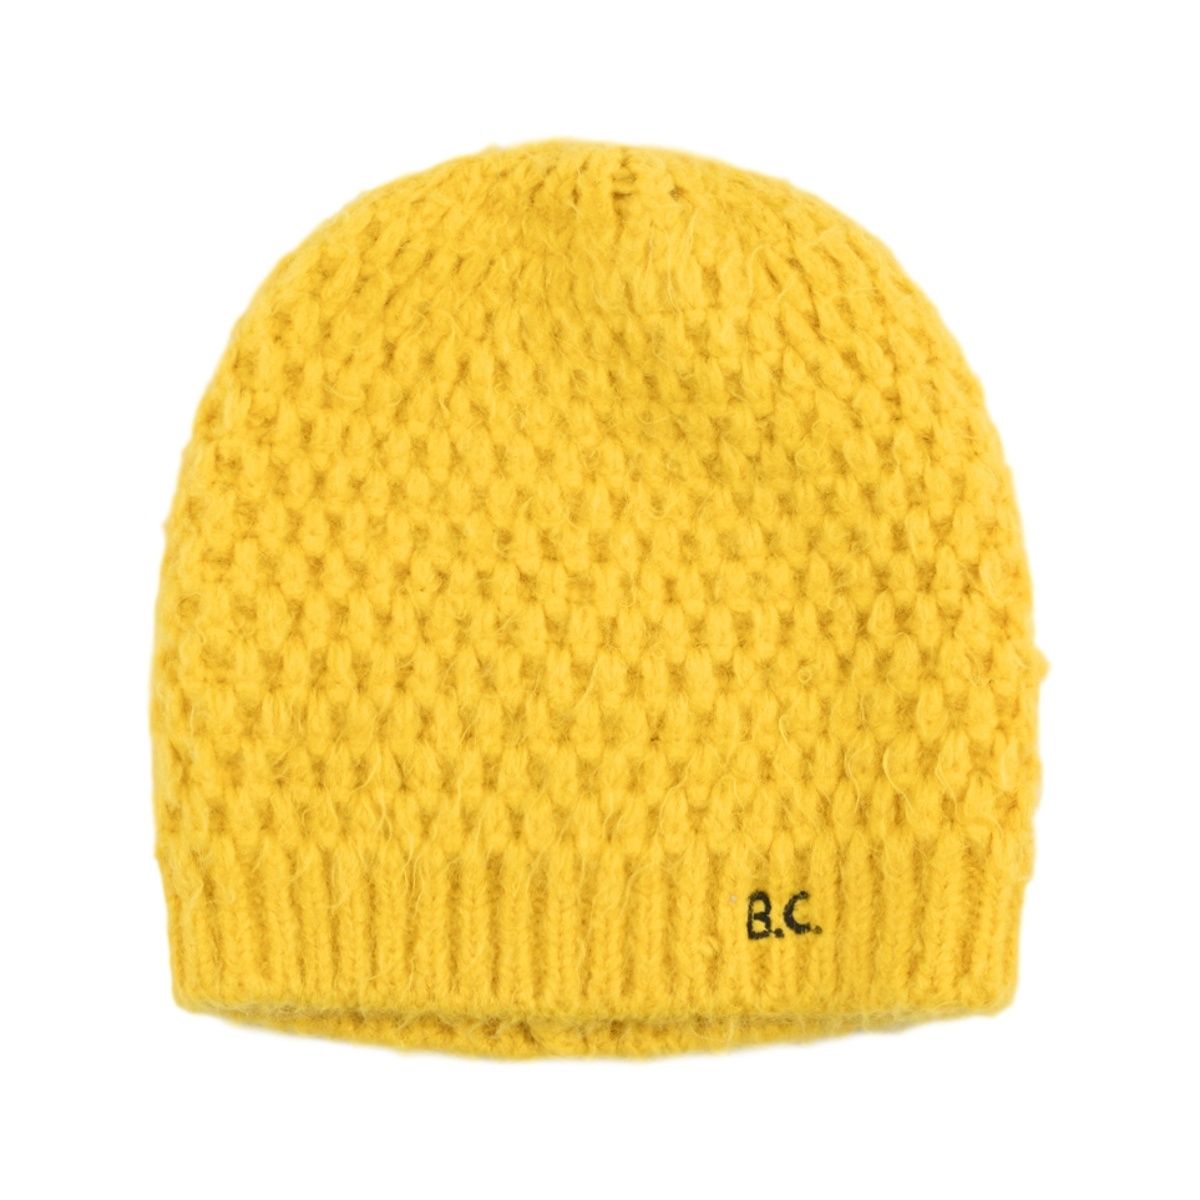 Bobo Choses - Soft Beanie yellow - 帽子と帽子 - 219124 